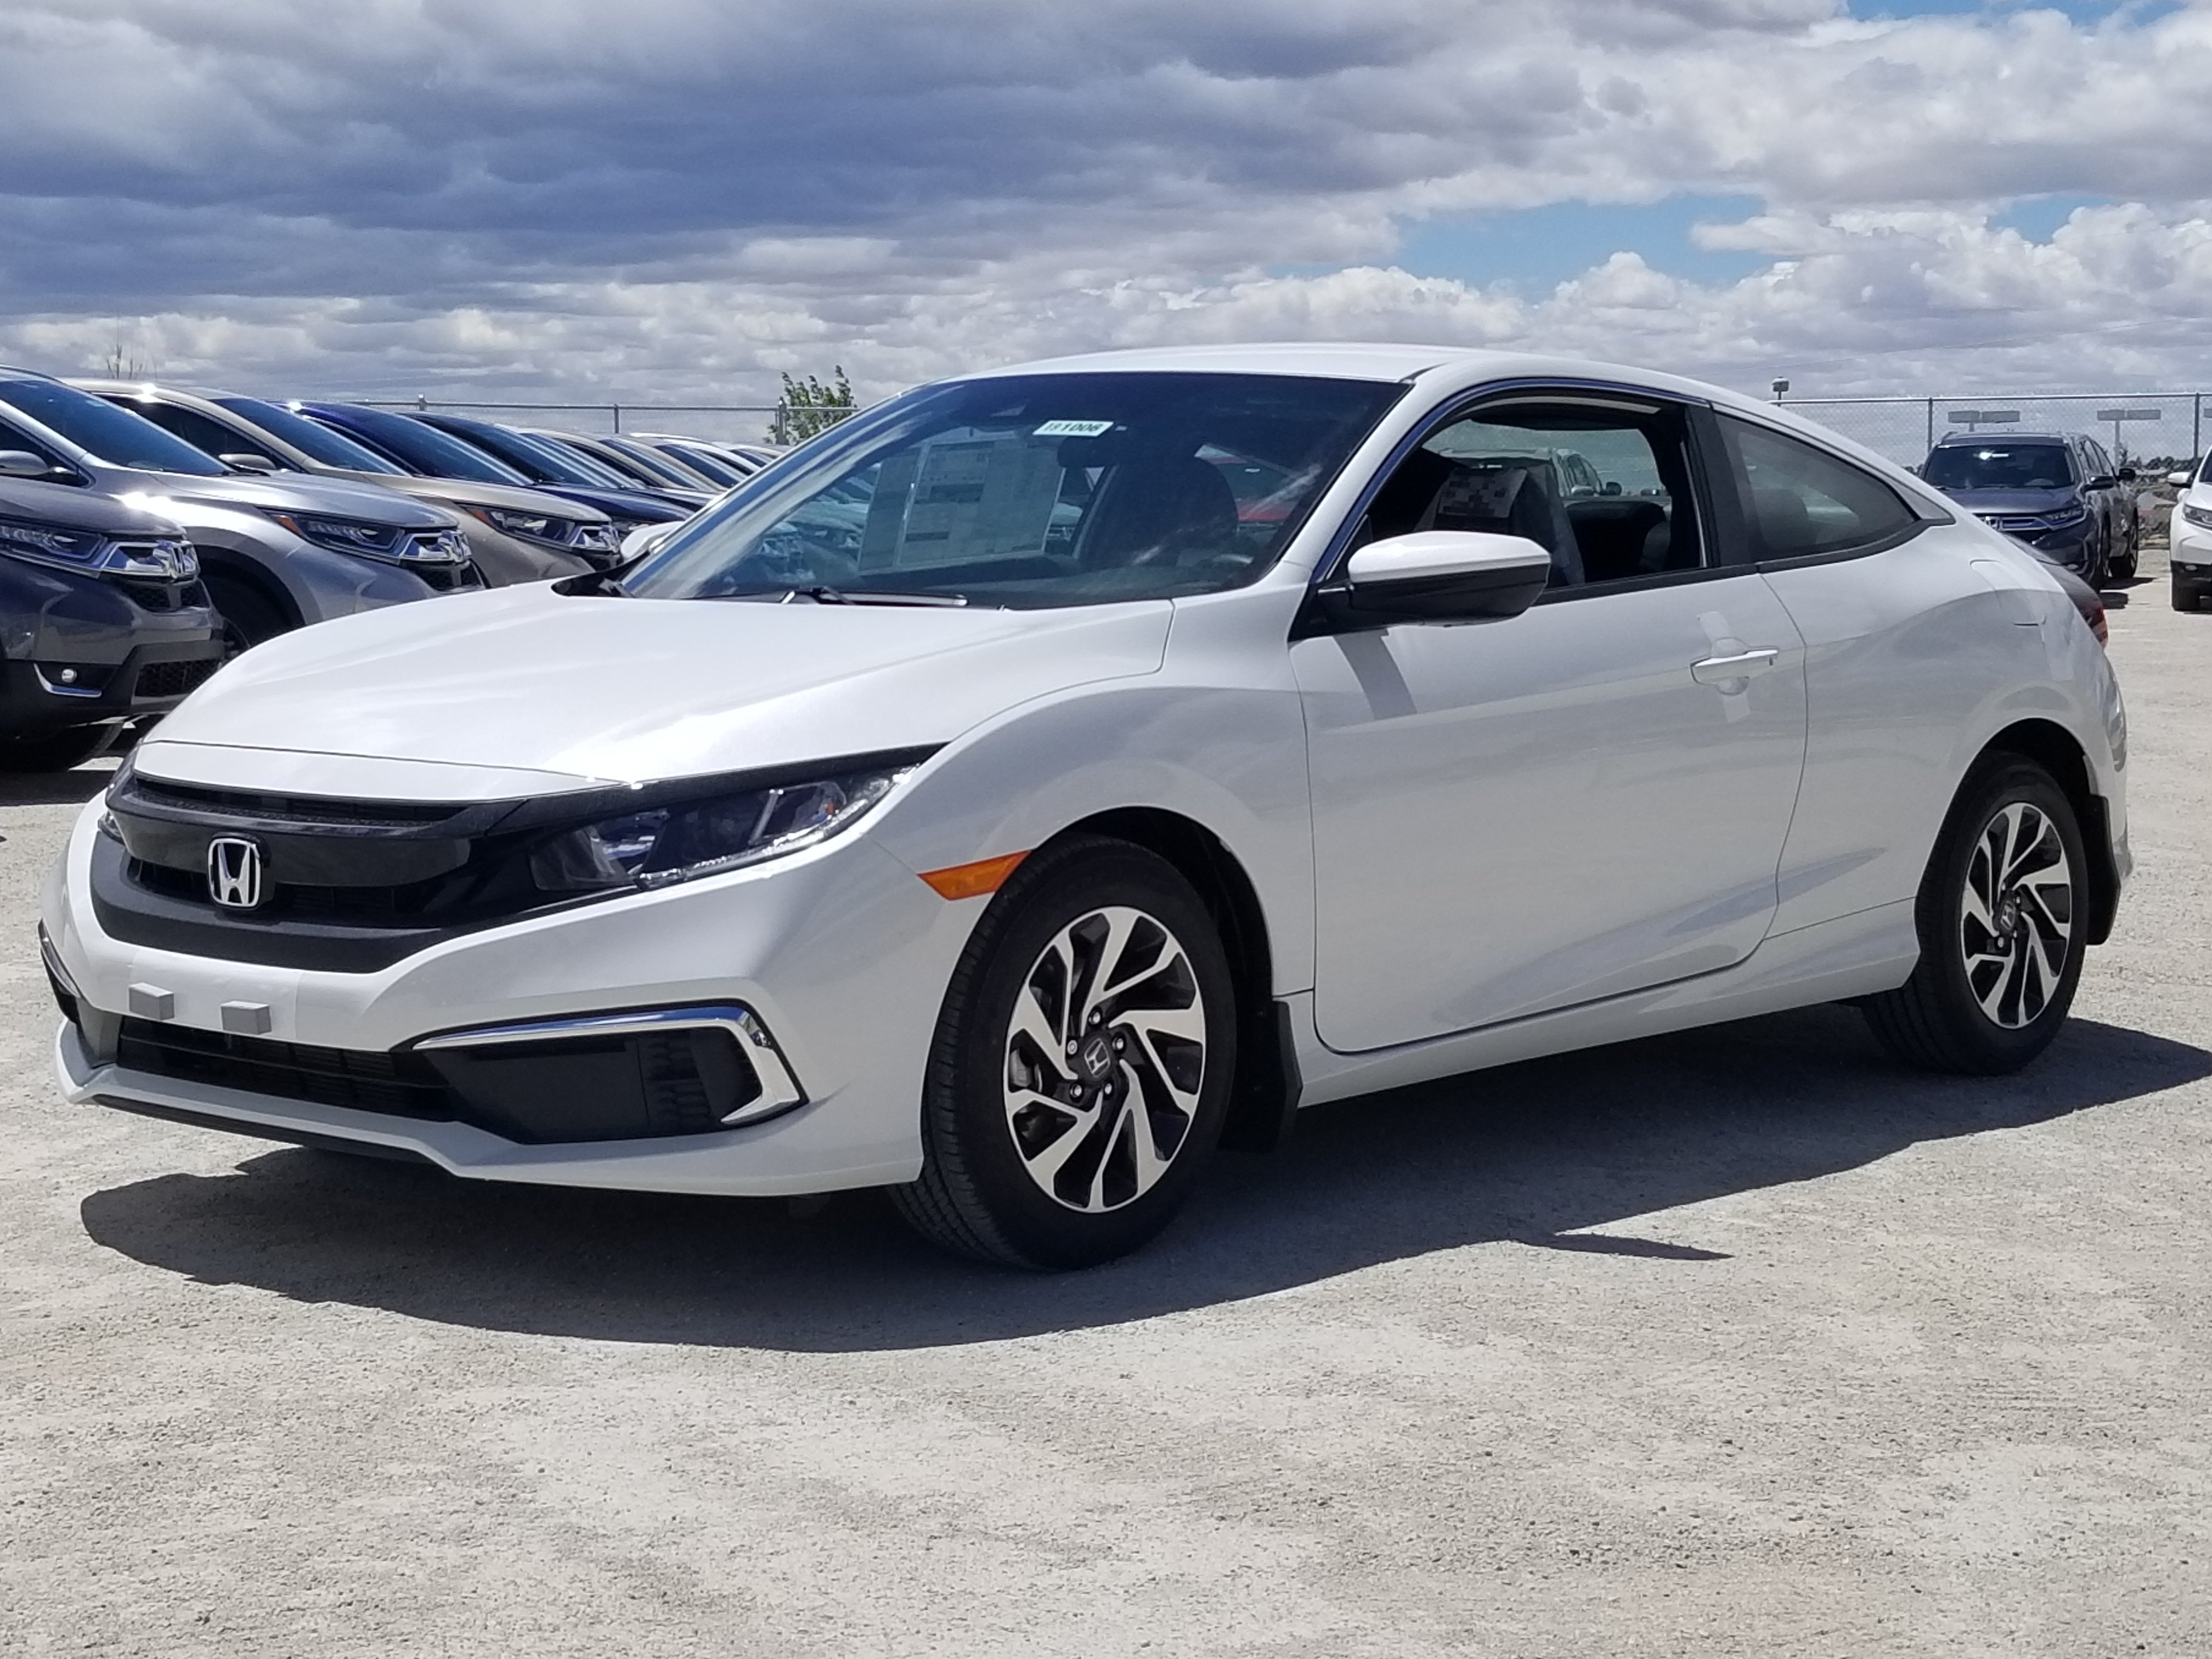 New 2019 Honda Civic Coupe LX 2dr Car in Rio Rancho